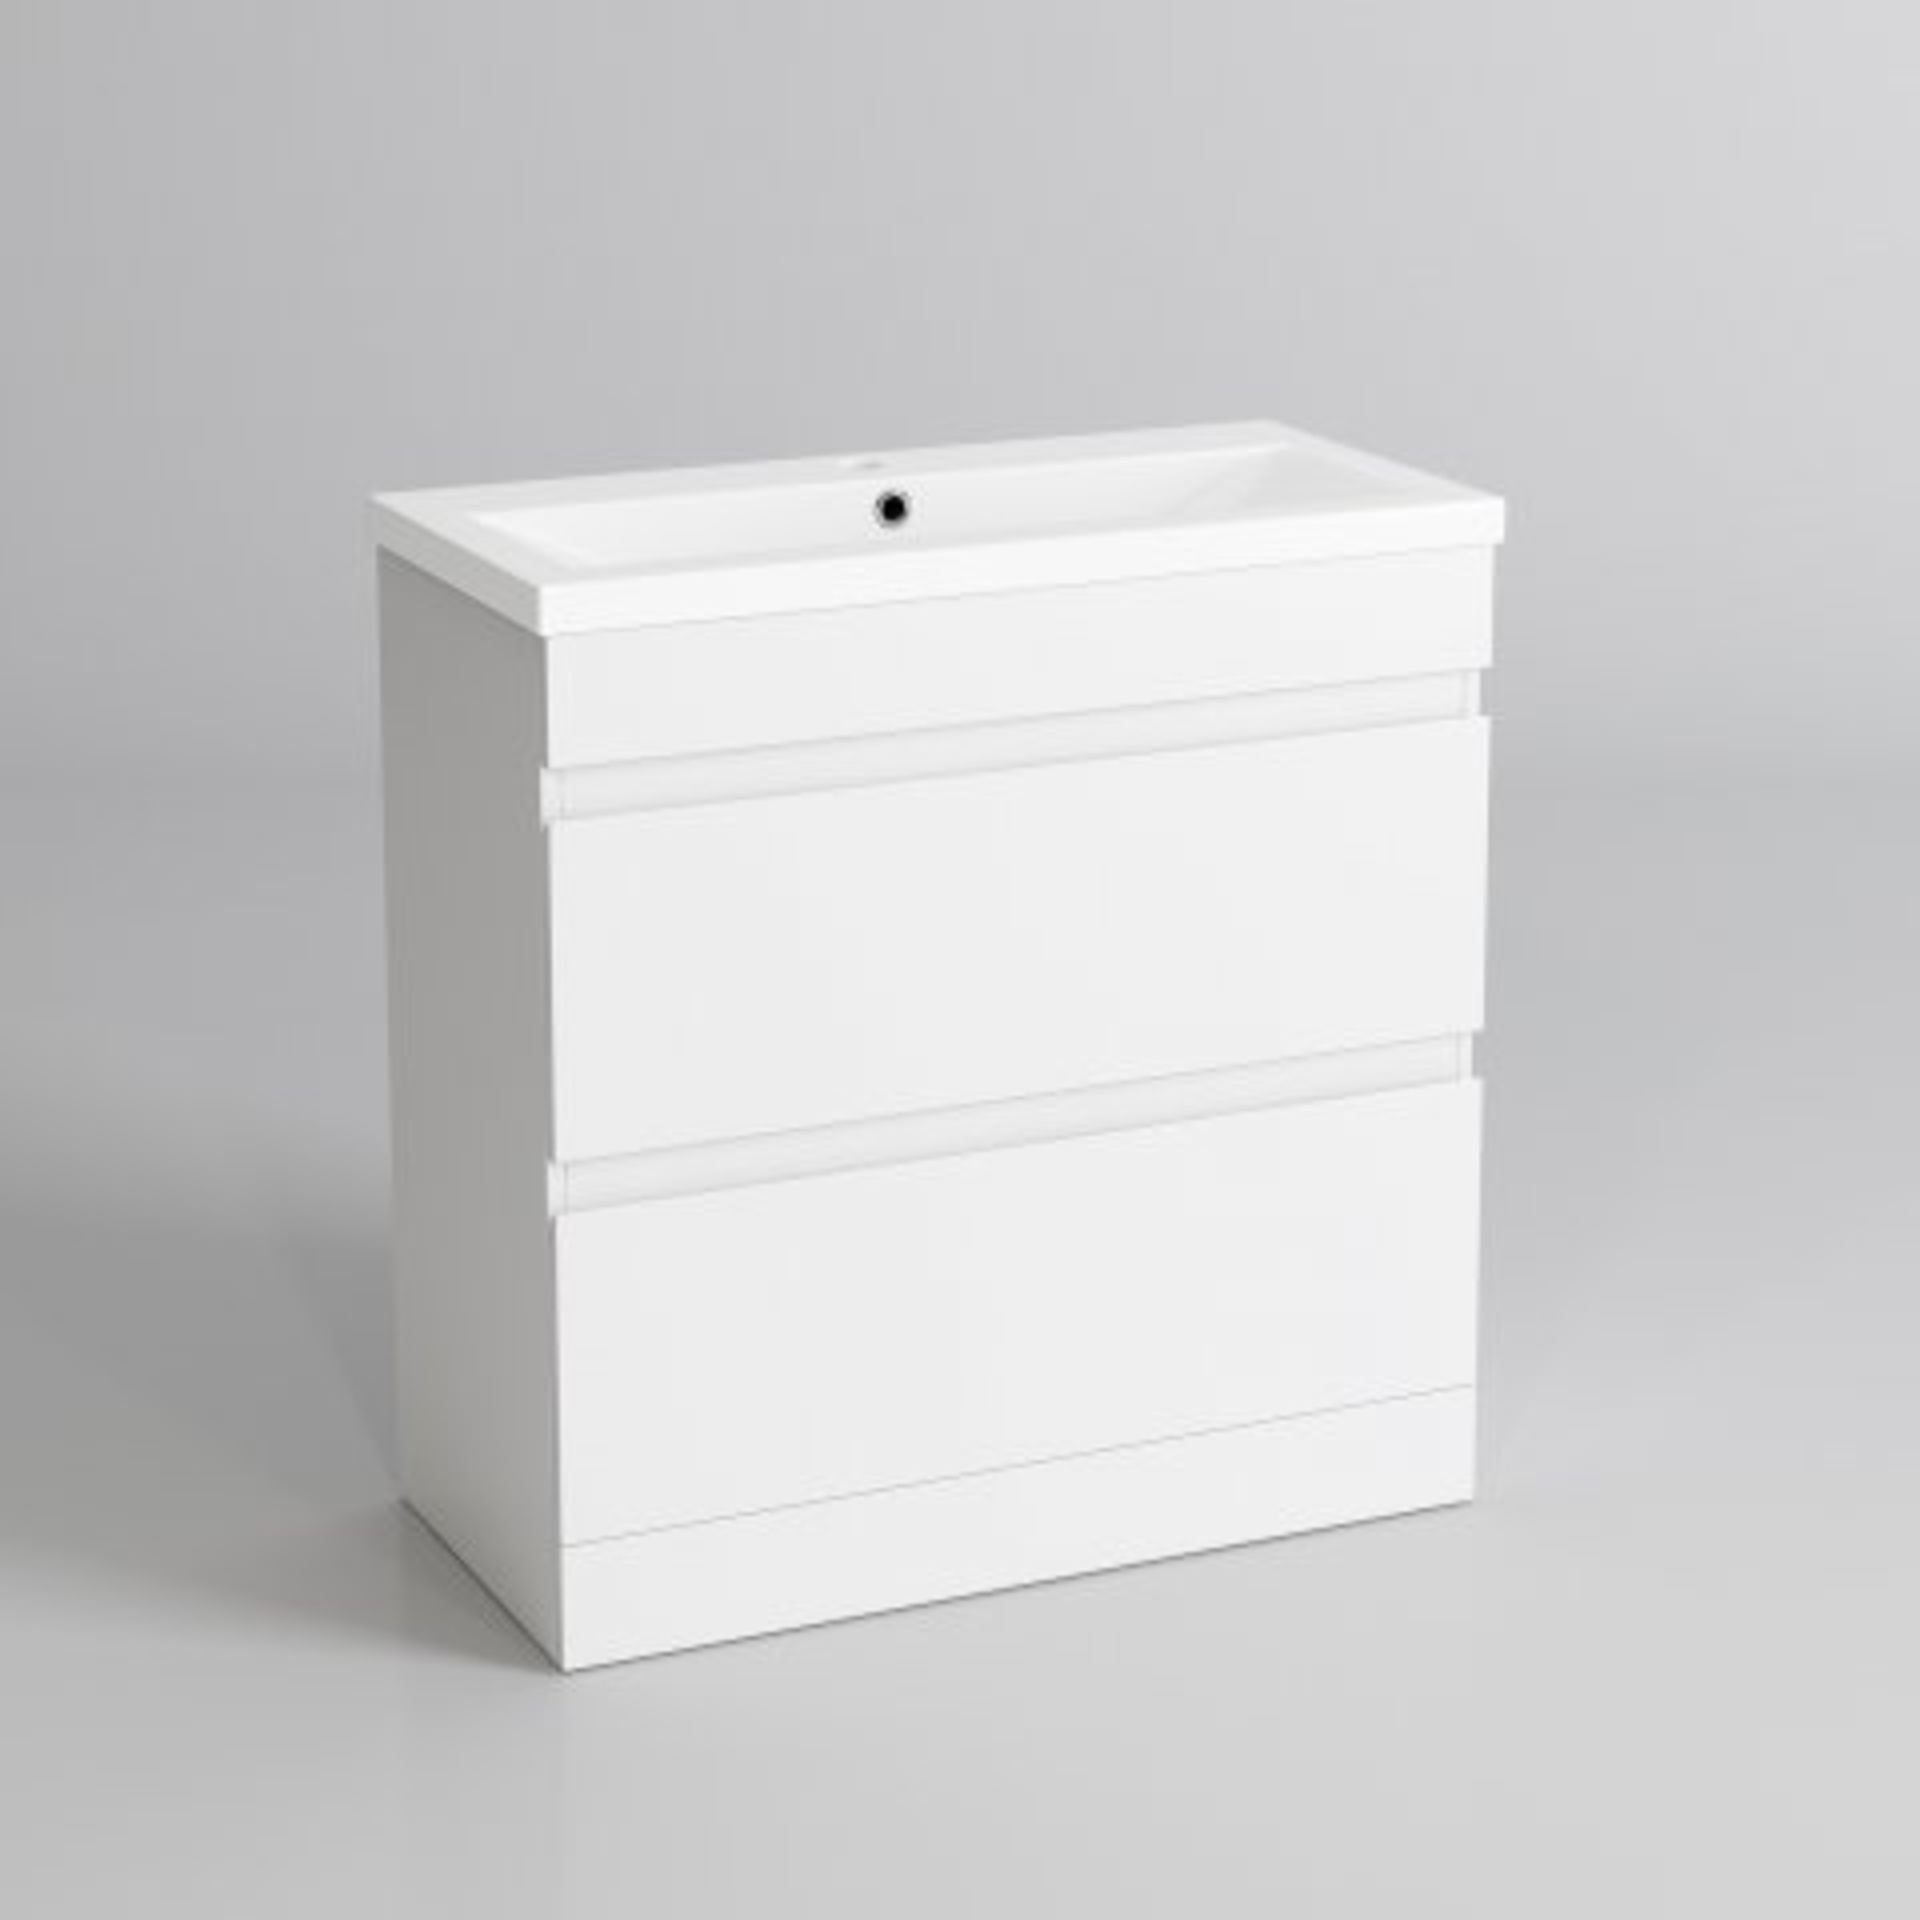 (H41) 800mm Trent High Gloss White Double Drawer Basin Cabinet - Floor Standing. RRP £425.99. - Bild 4 aus 4